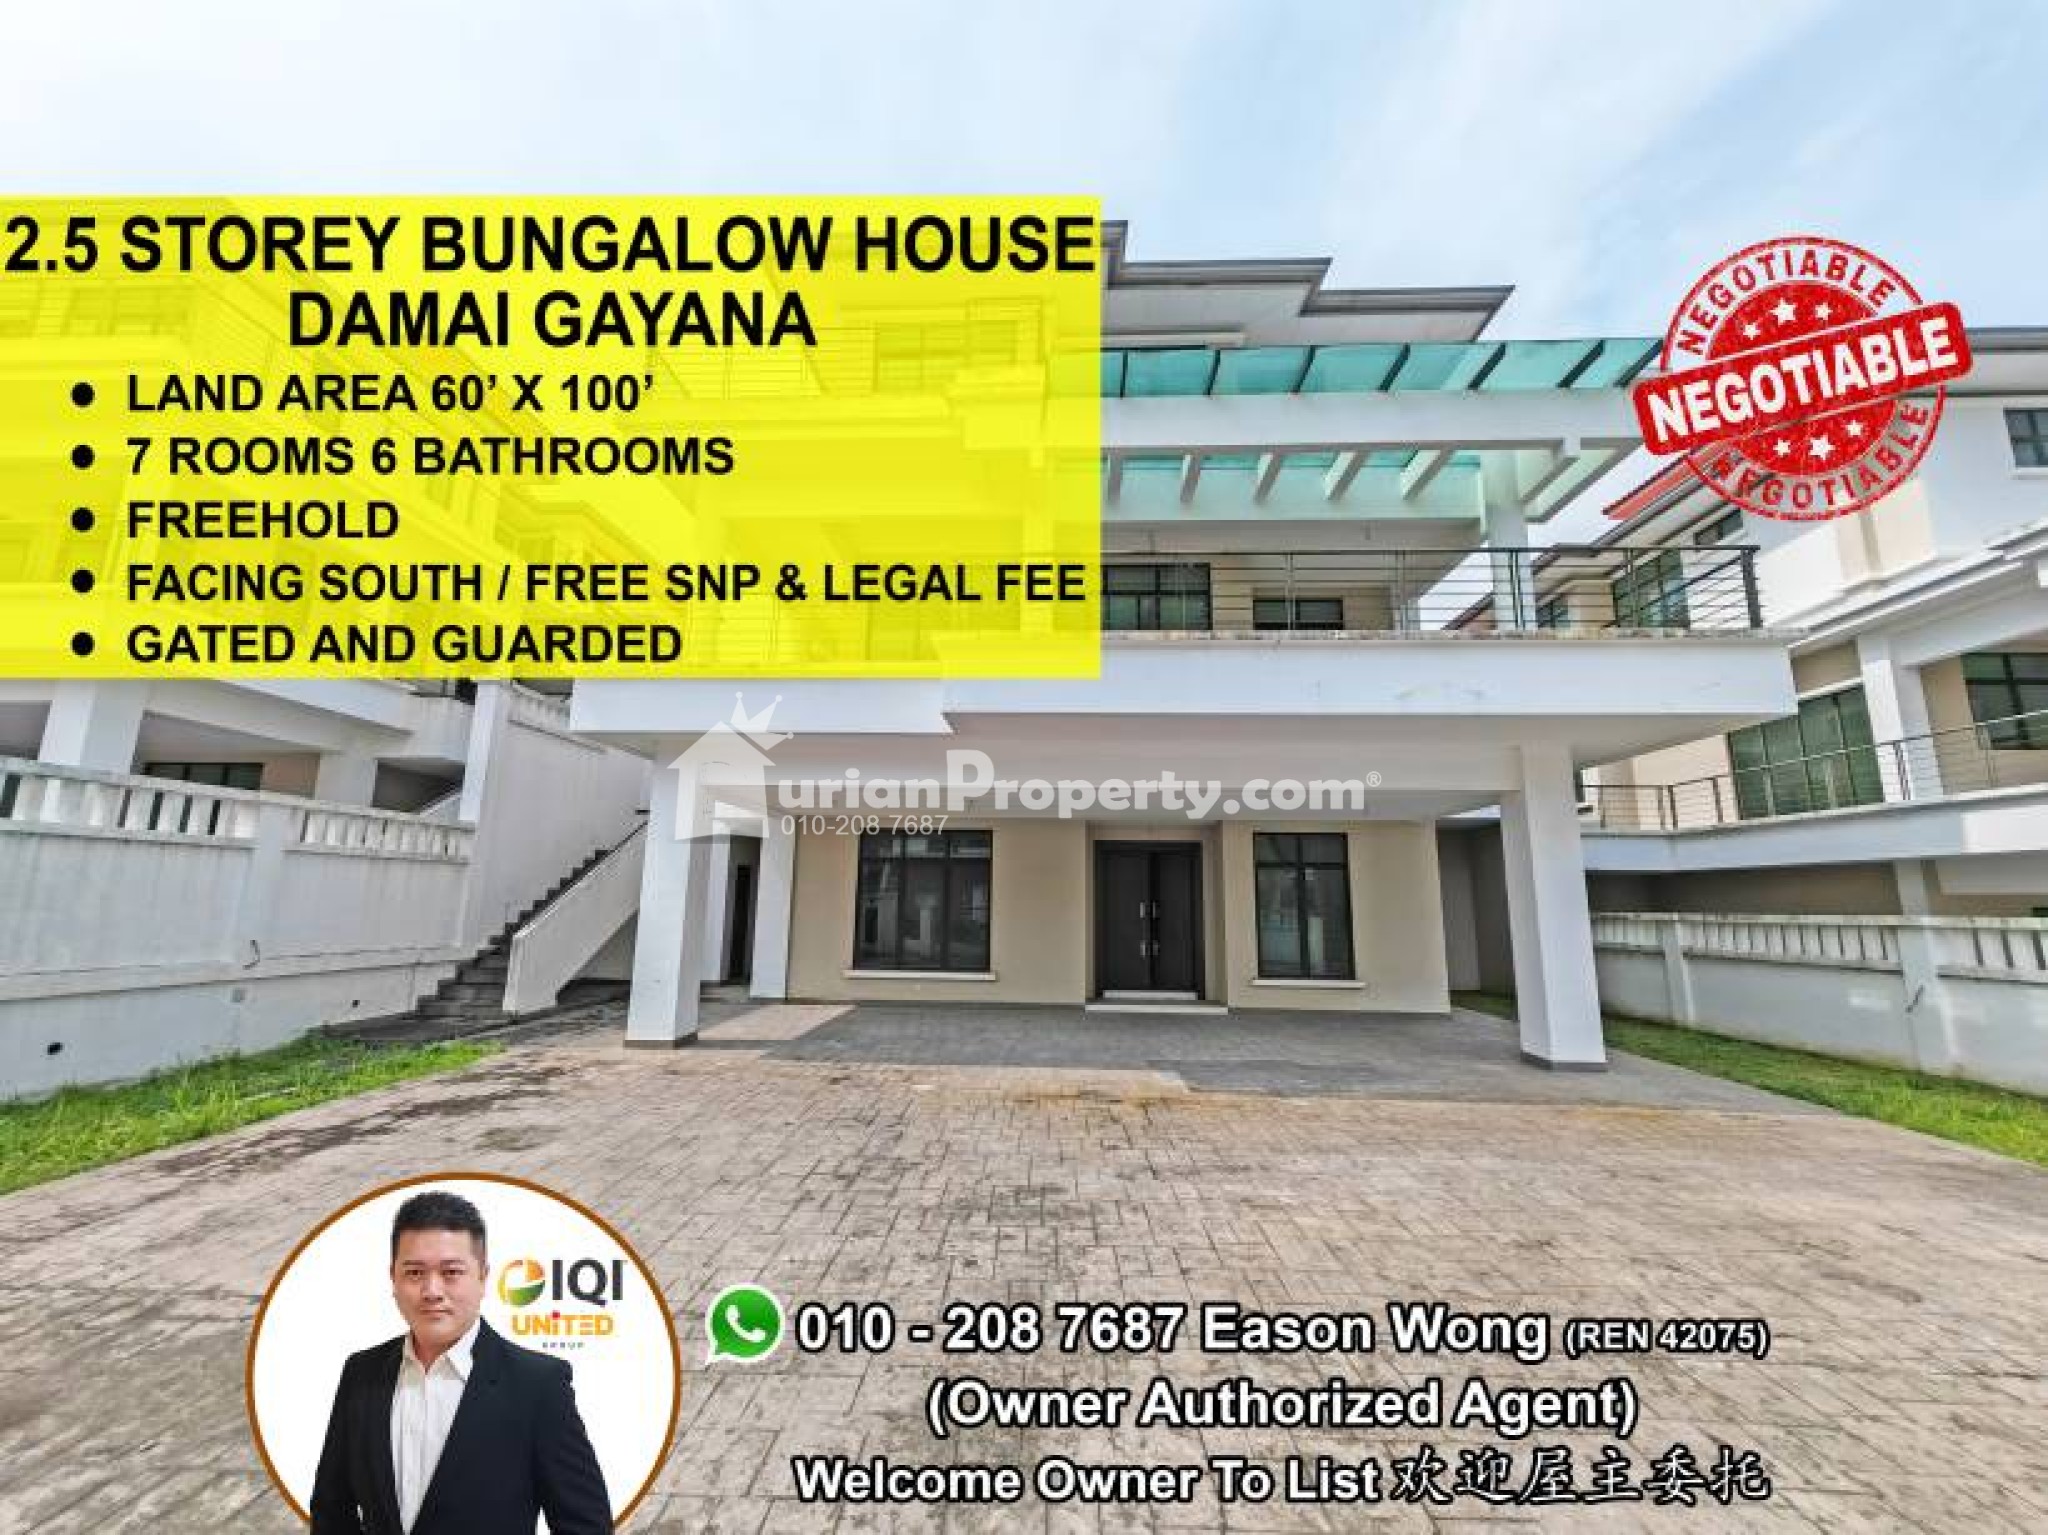 Bungalow House For Sale at Damai Gayana